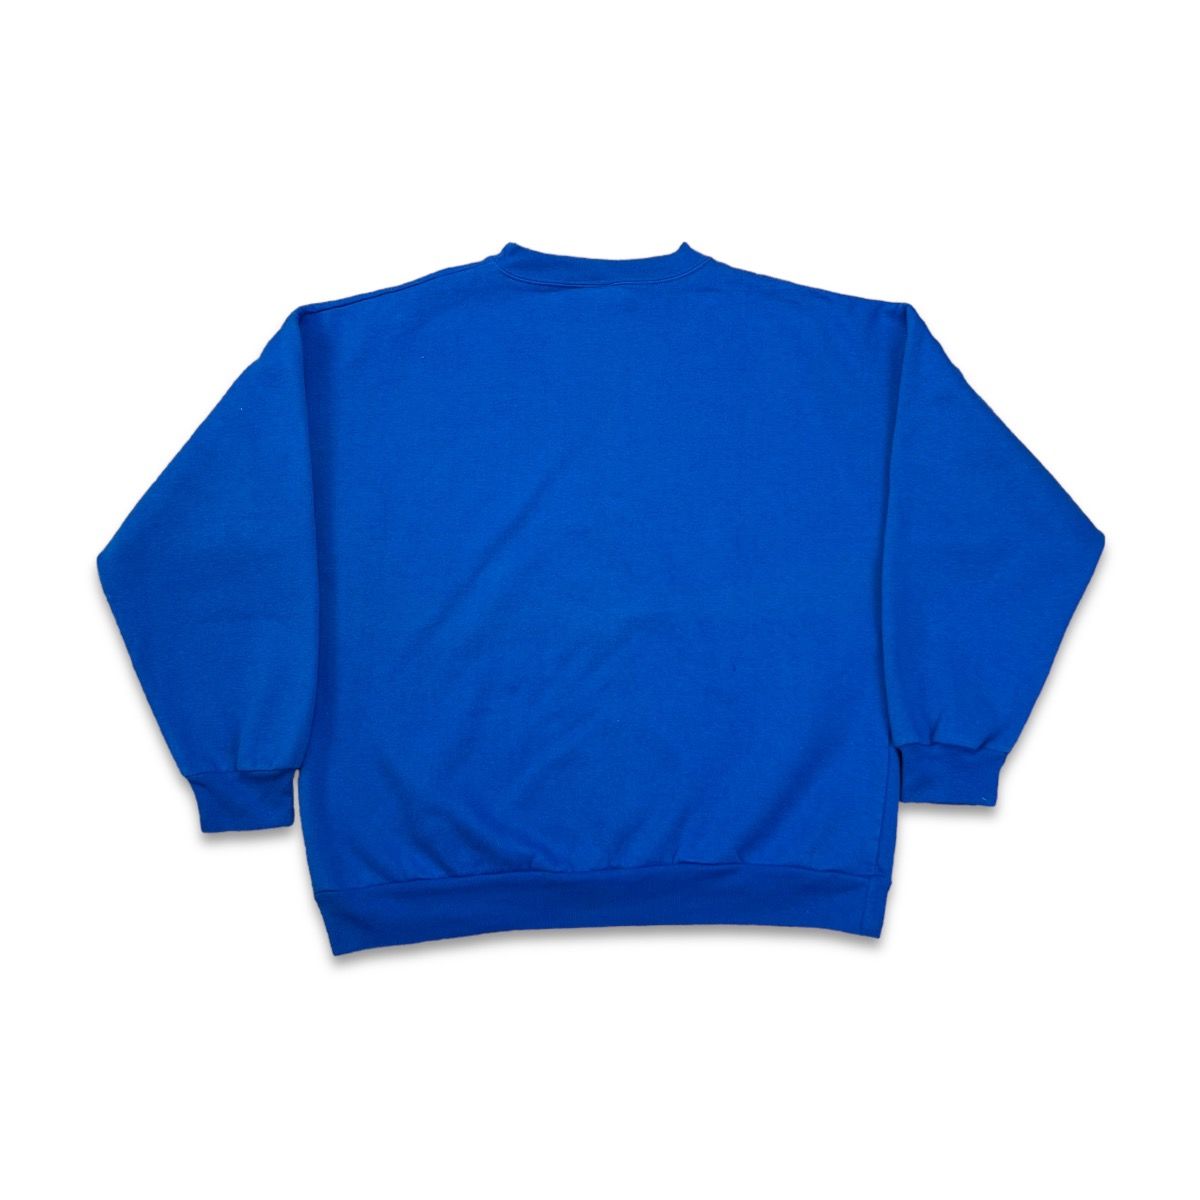 Vintage Vintage 90s Blank Sweatshirt Size US S / EU 44-46 / 1 - 2 Preview